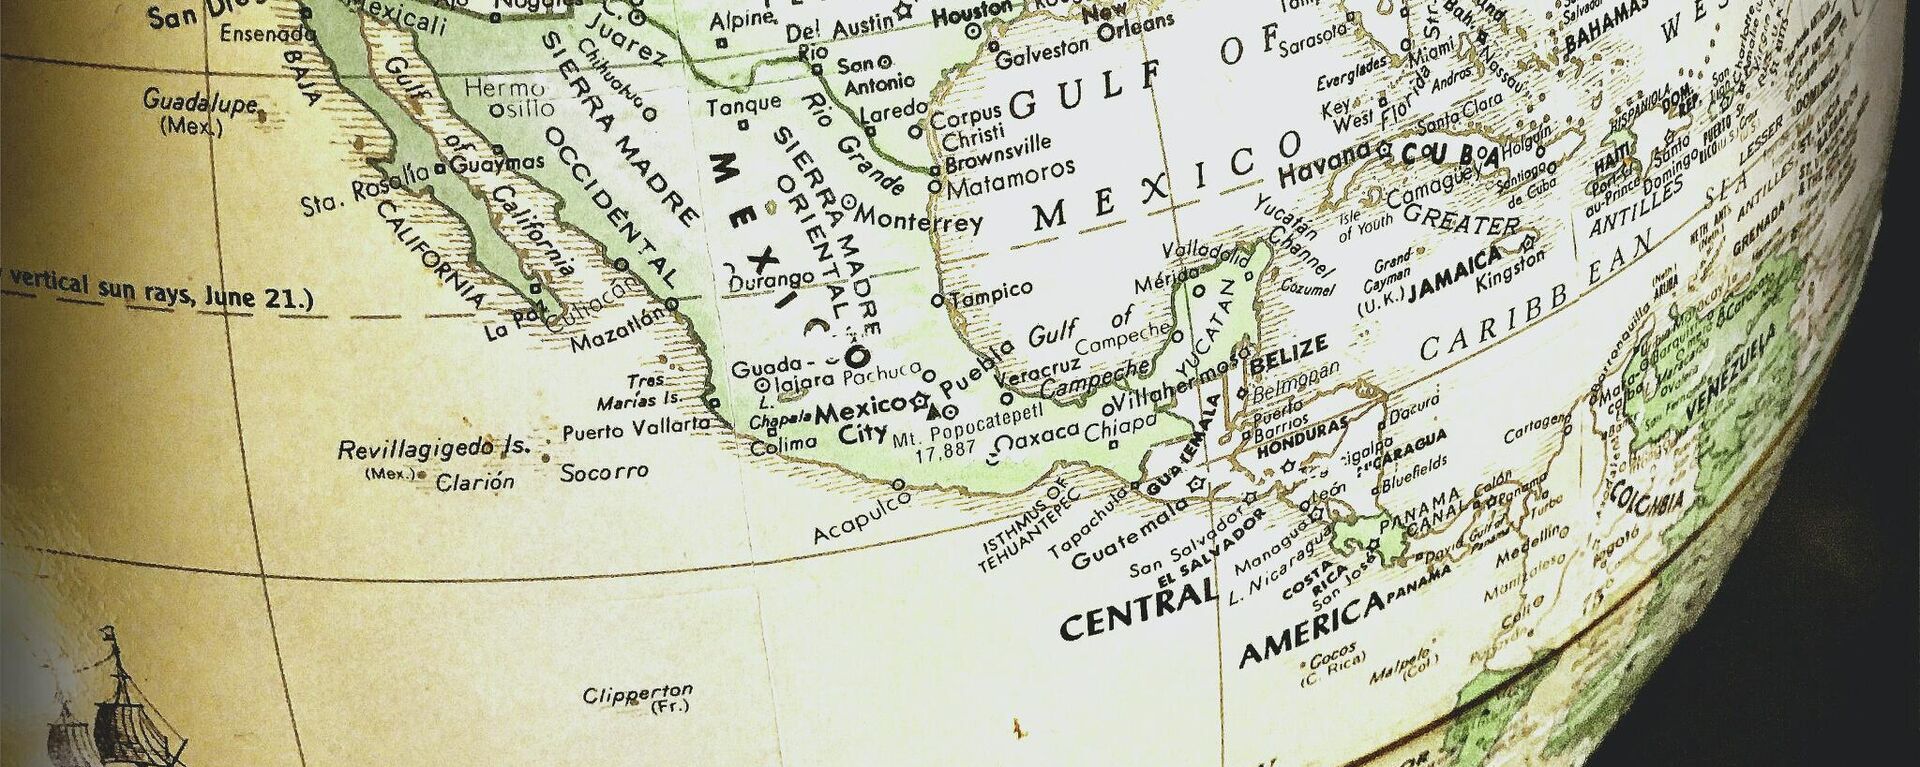 Mapa de Centroamérica - Sputnik Mundo, 1920, 17.09.2021